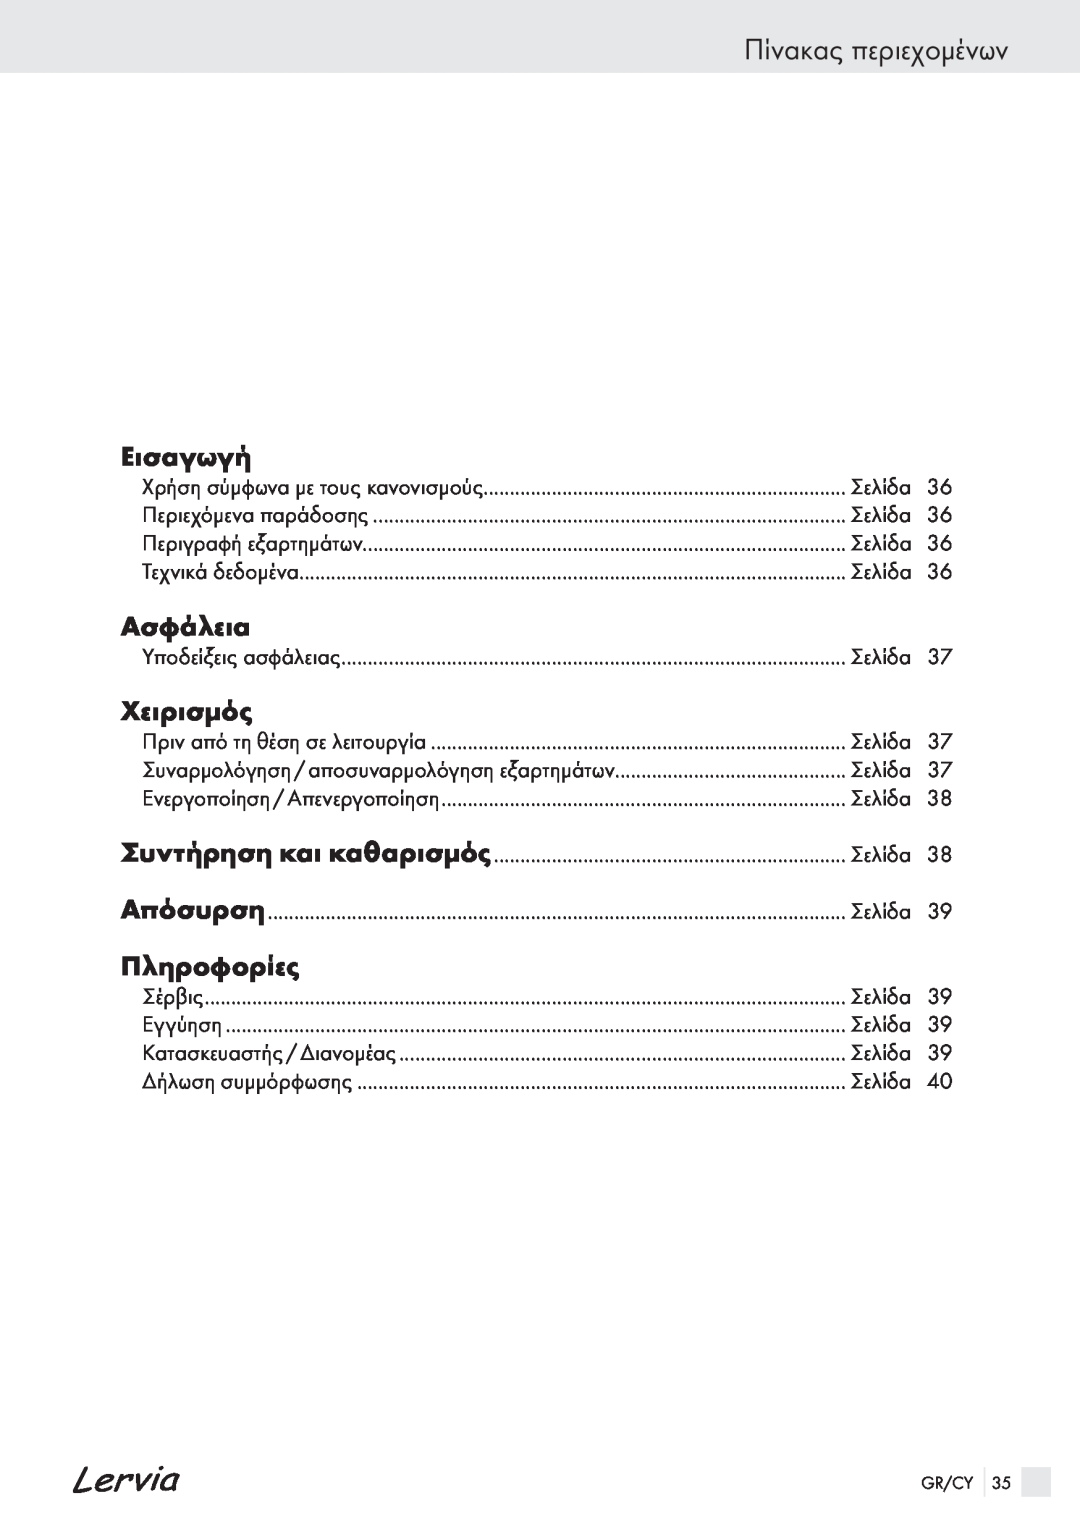 Kompernass KH 4425 manual Πίνακας περιεχομένων, Εισαγωγή, Ασφάλεια, Χειρισμός, Πληροφορίες 